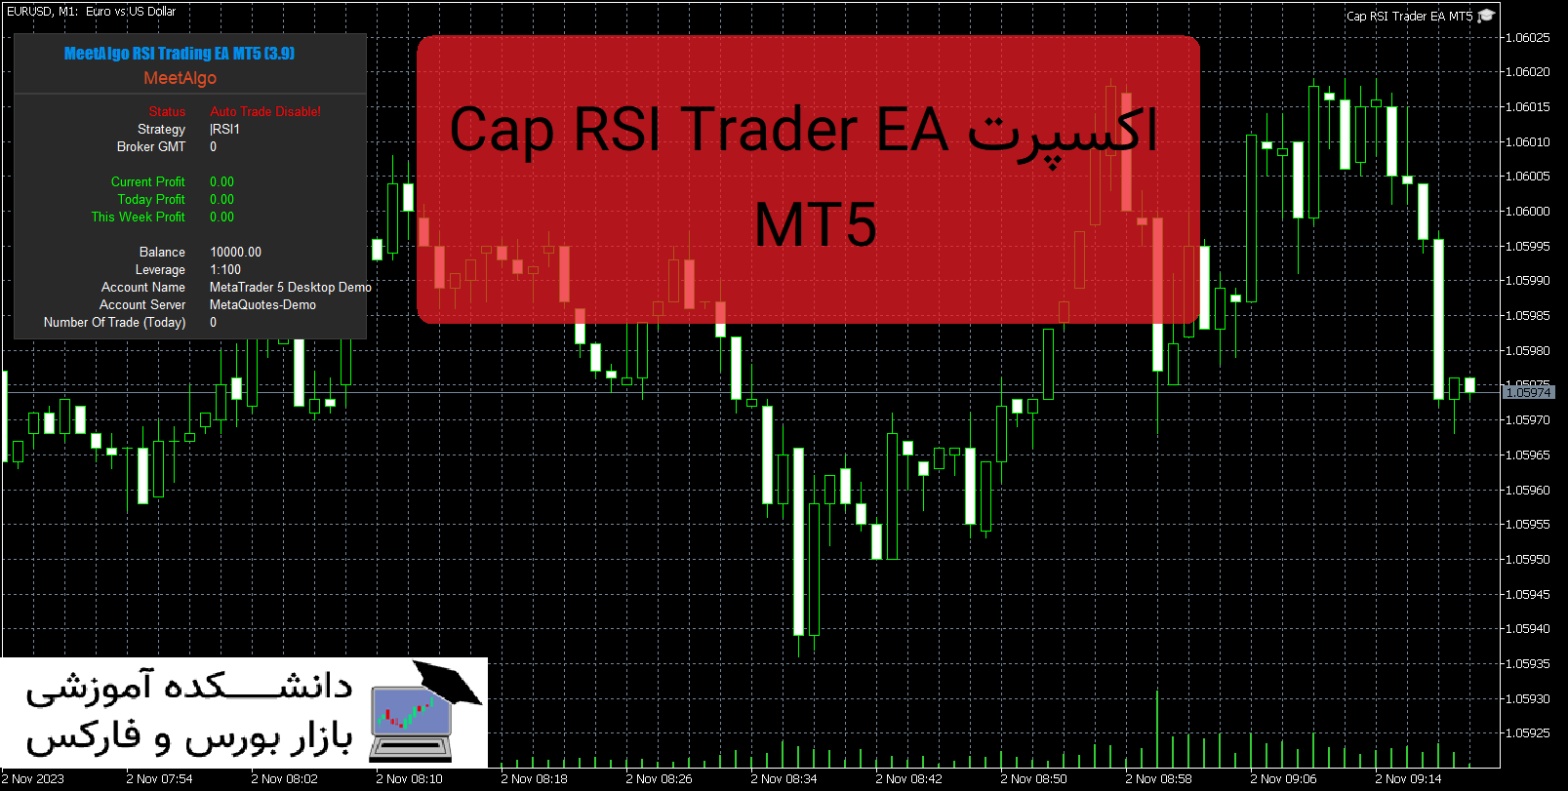 CAP RSI Trader EA MT5 دانلود و معرفی اکسپرت